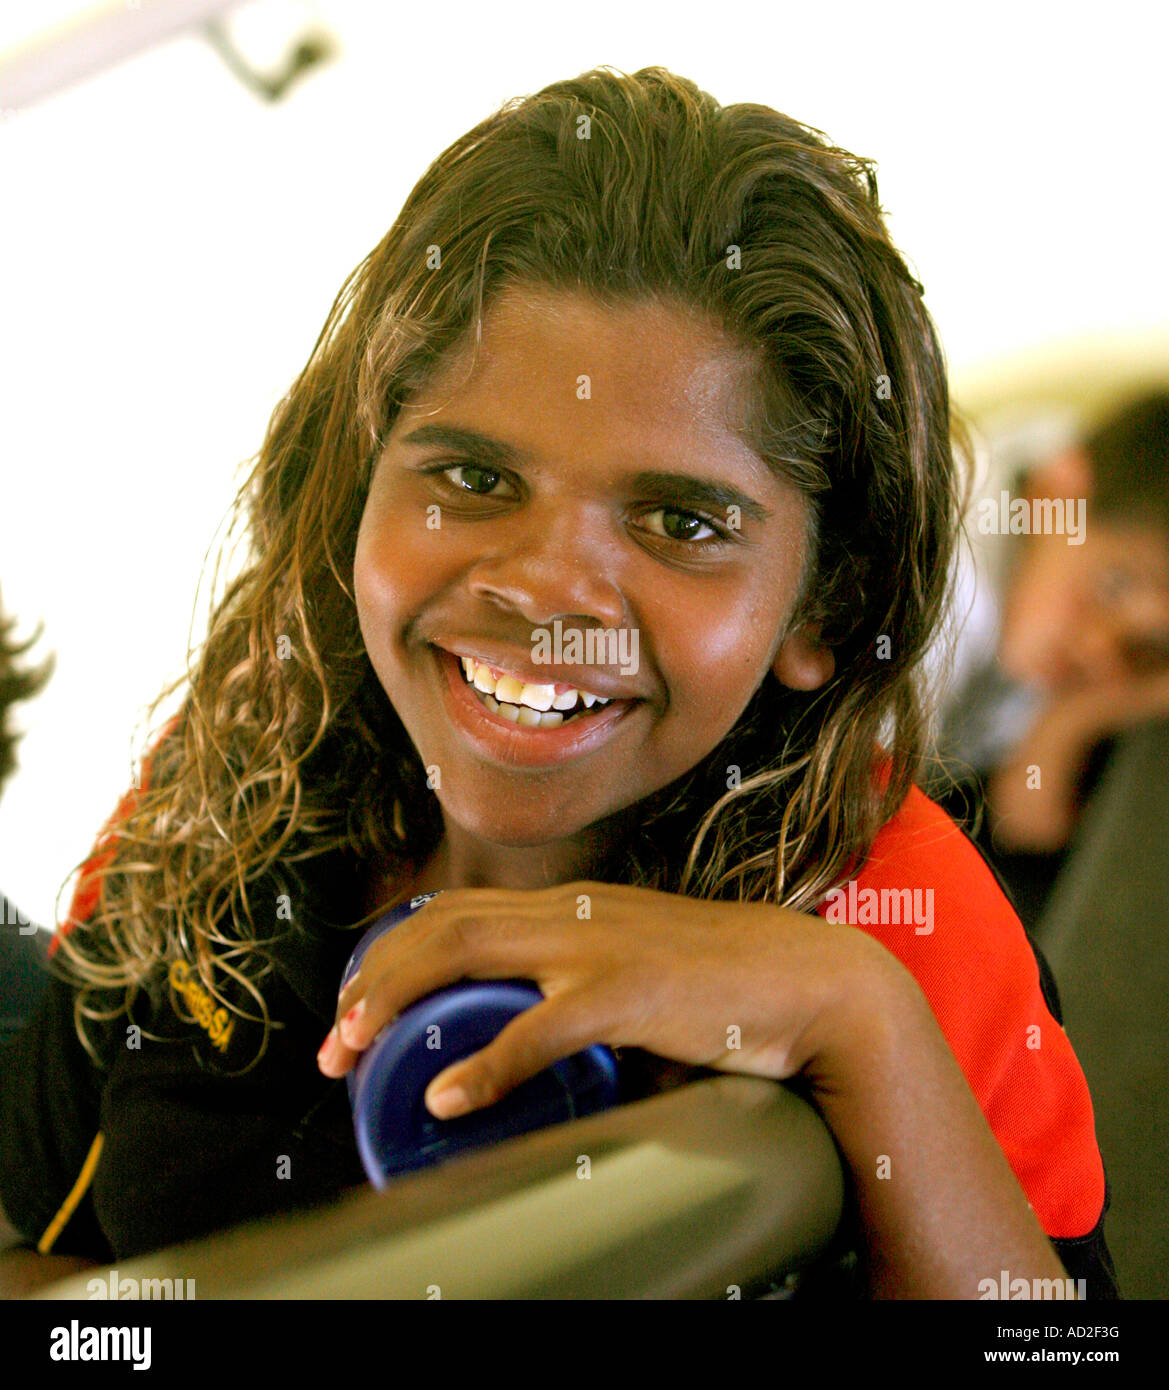 A beautiful smiling young aboriginal girl Stock Photo